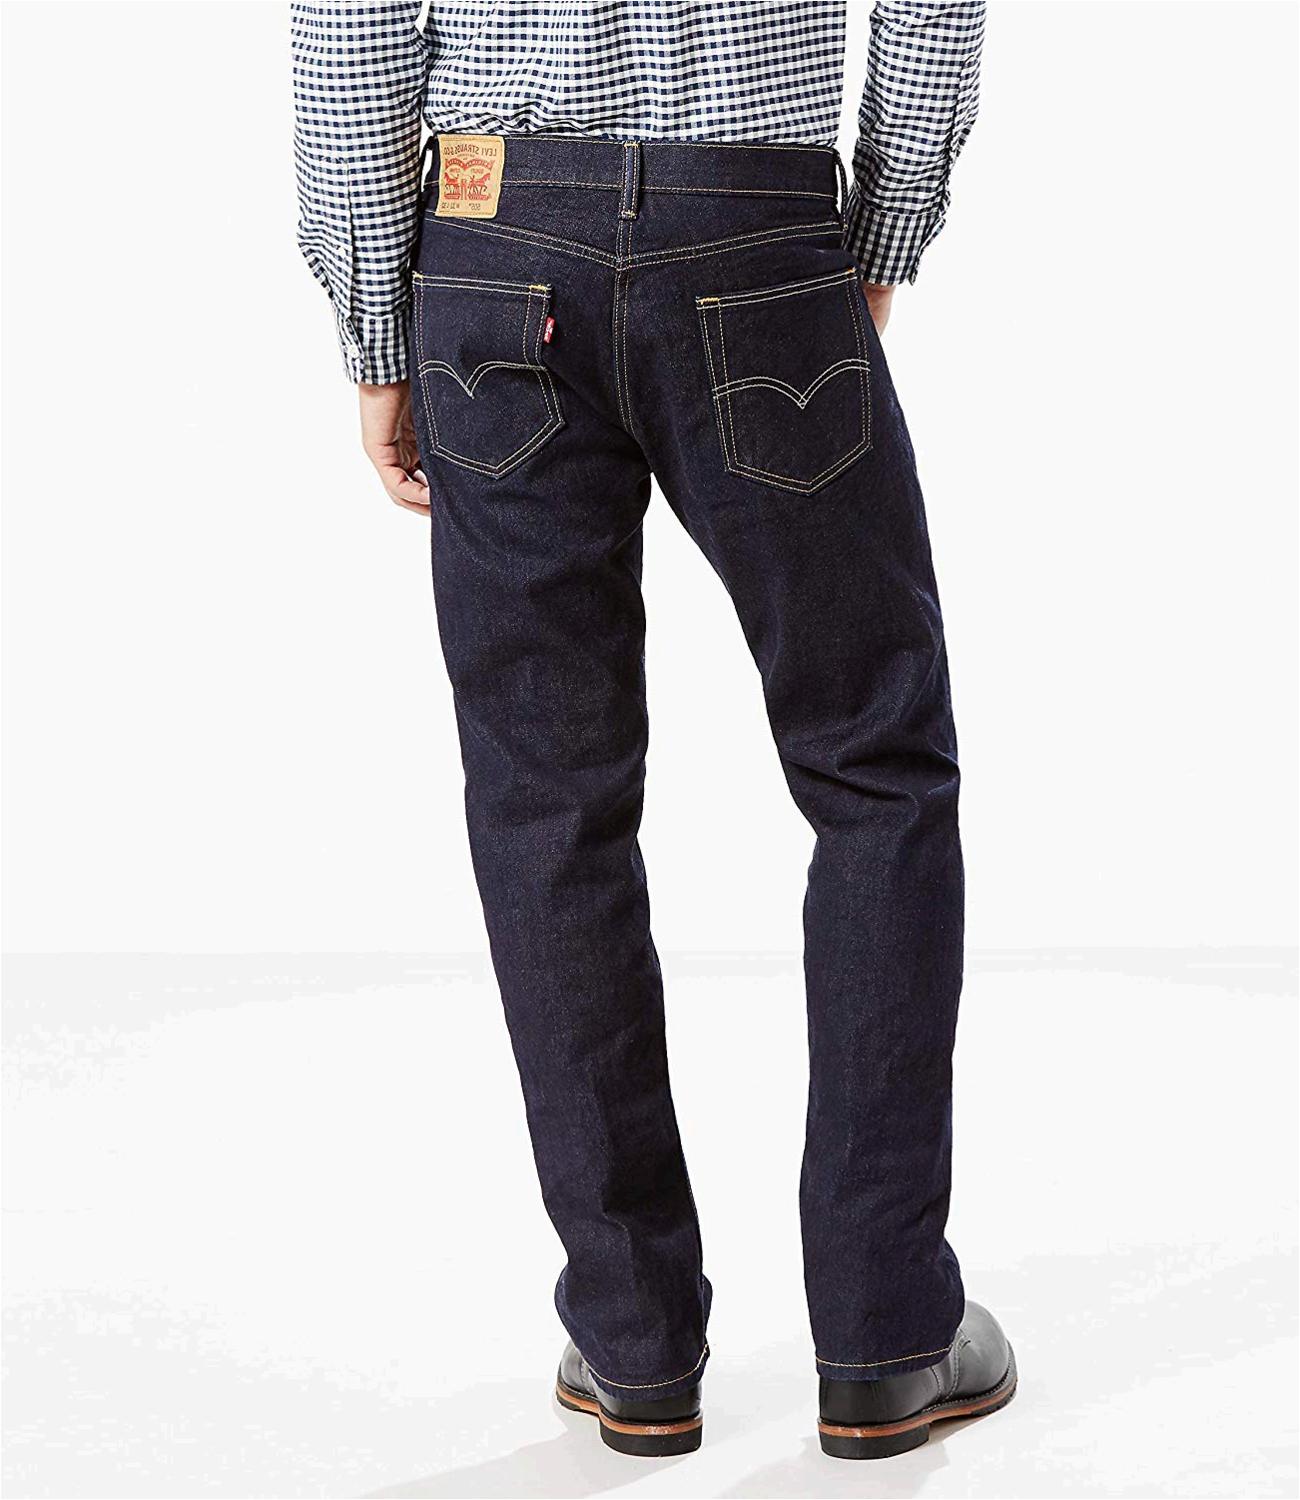 Levi's Men's 505 Regular Fit Jean, Rinse - Stretch, 44 32, Blue, Size